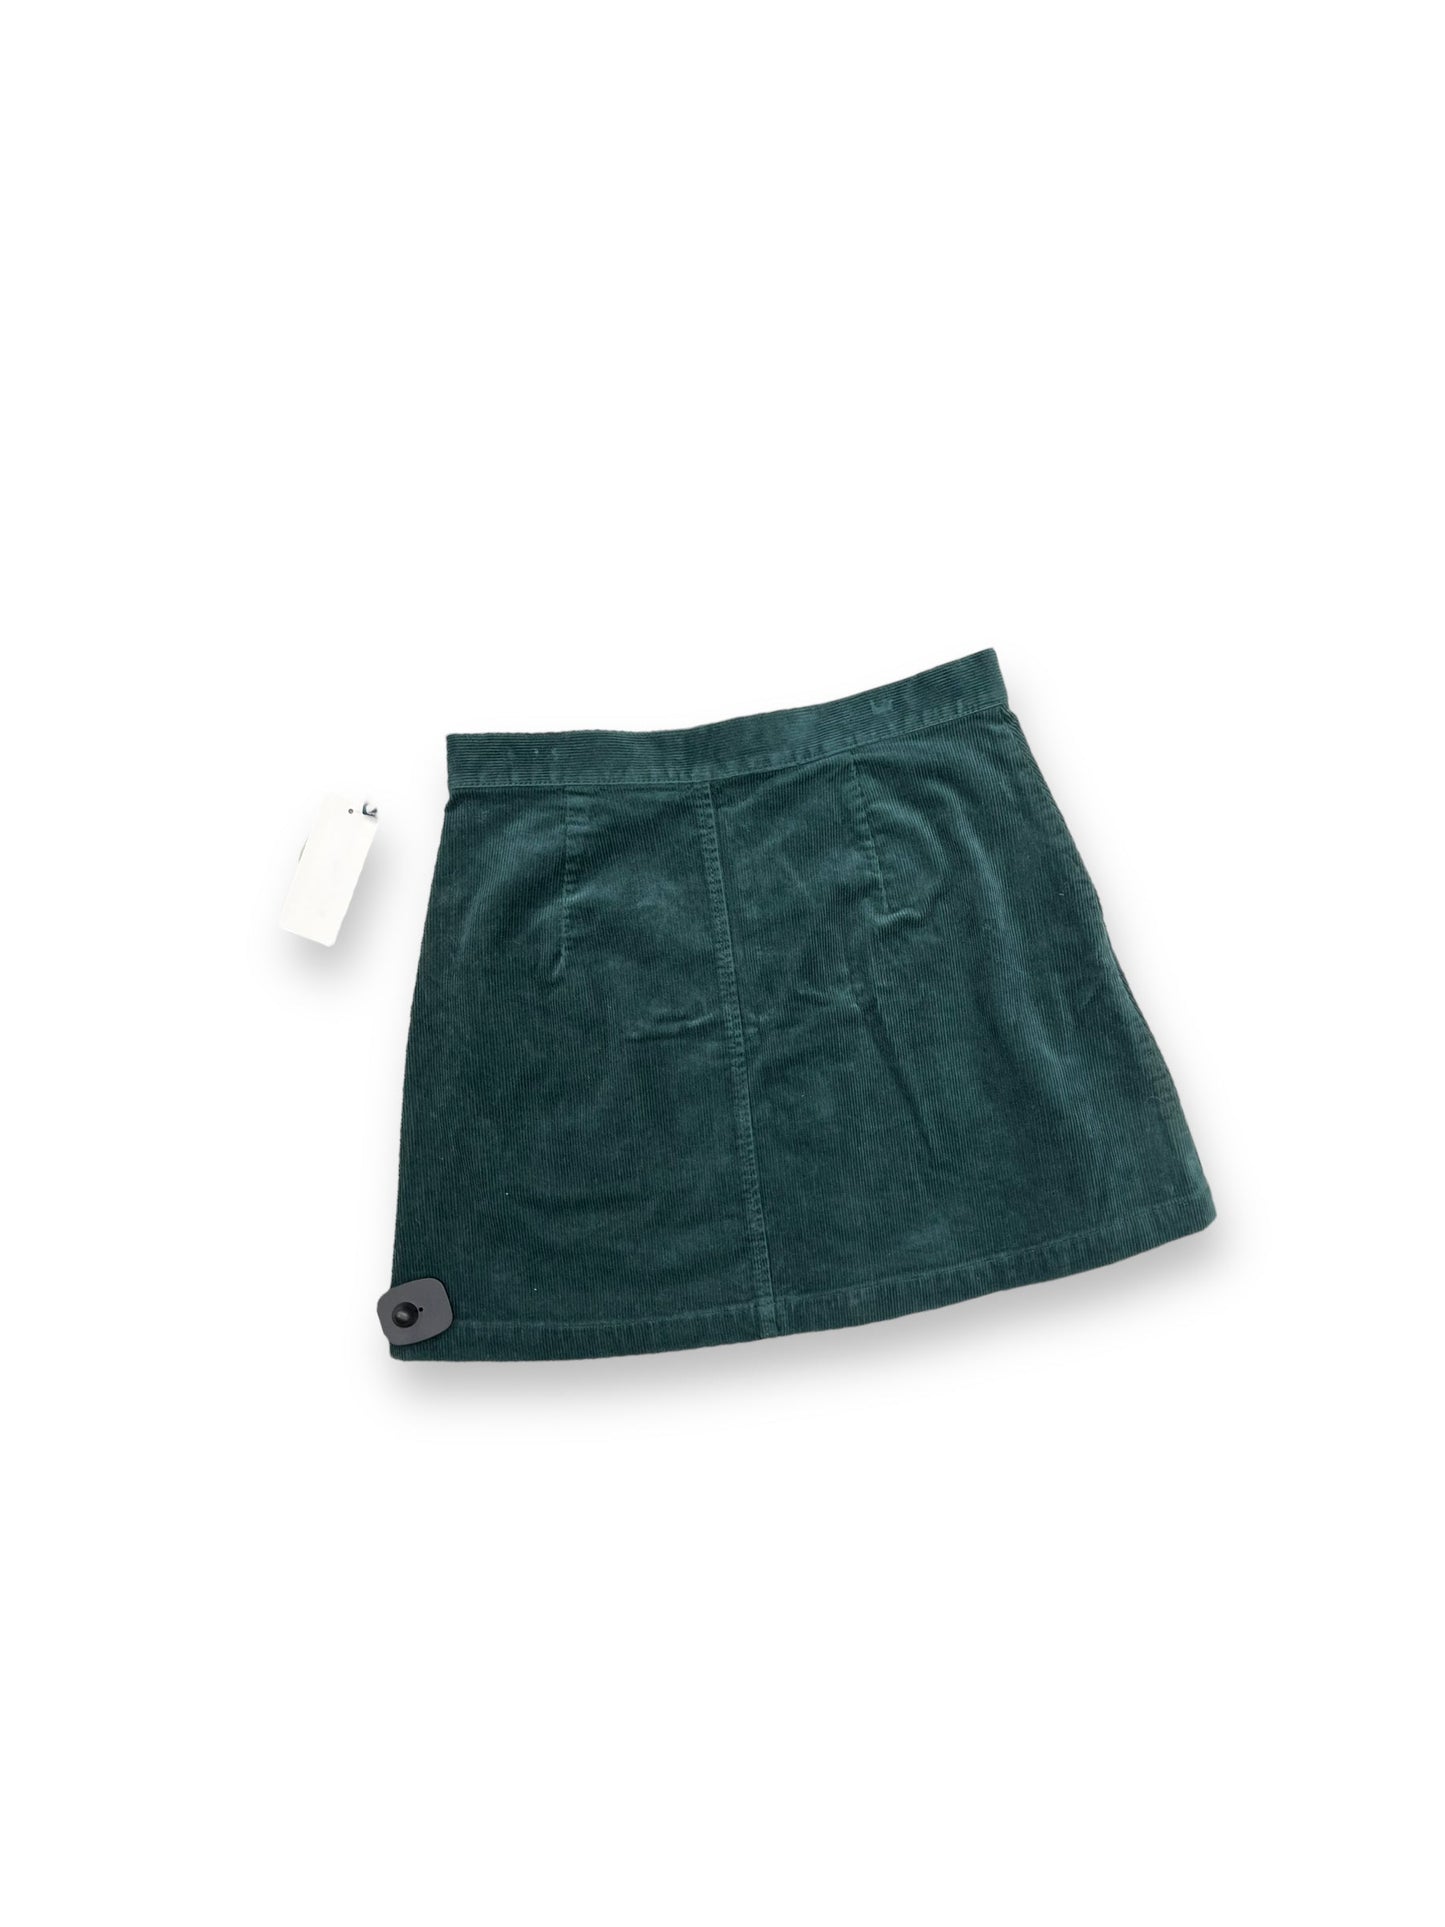 Skirt Mini & Short By Uniqlo  Size: 8